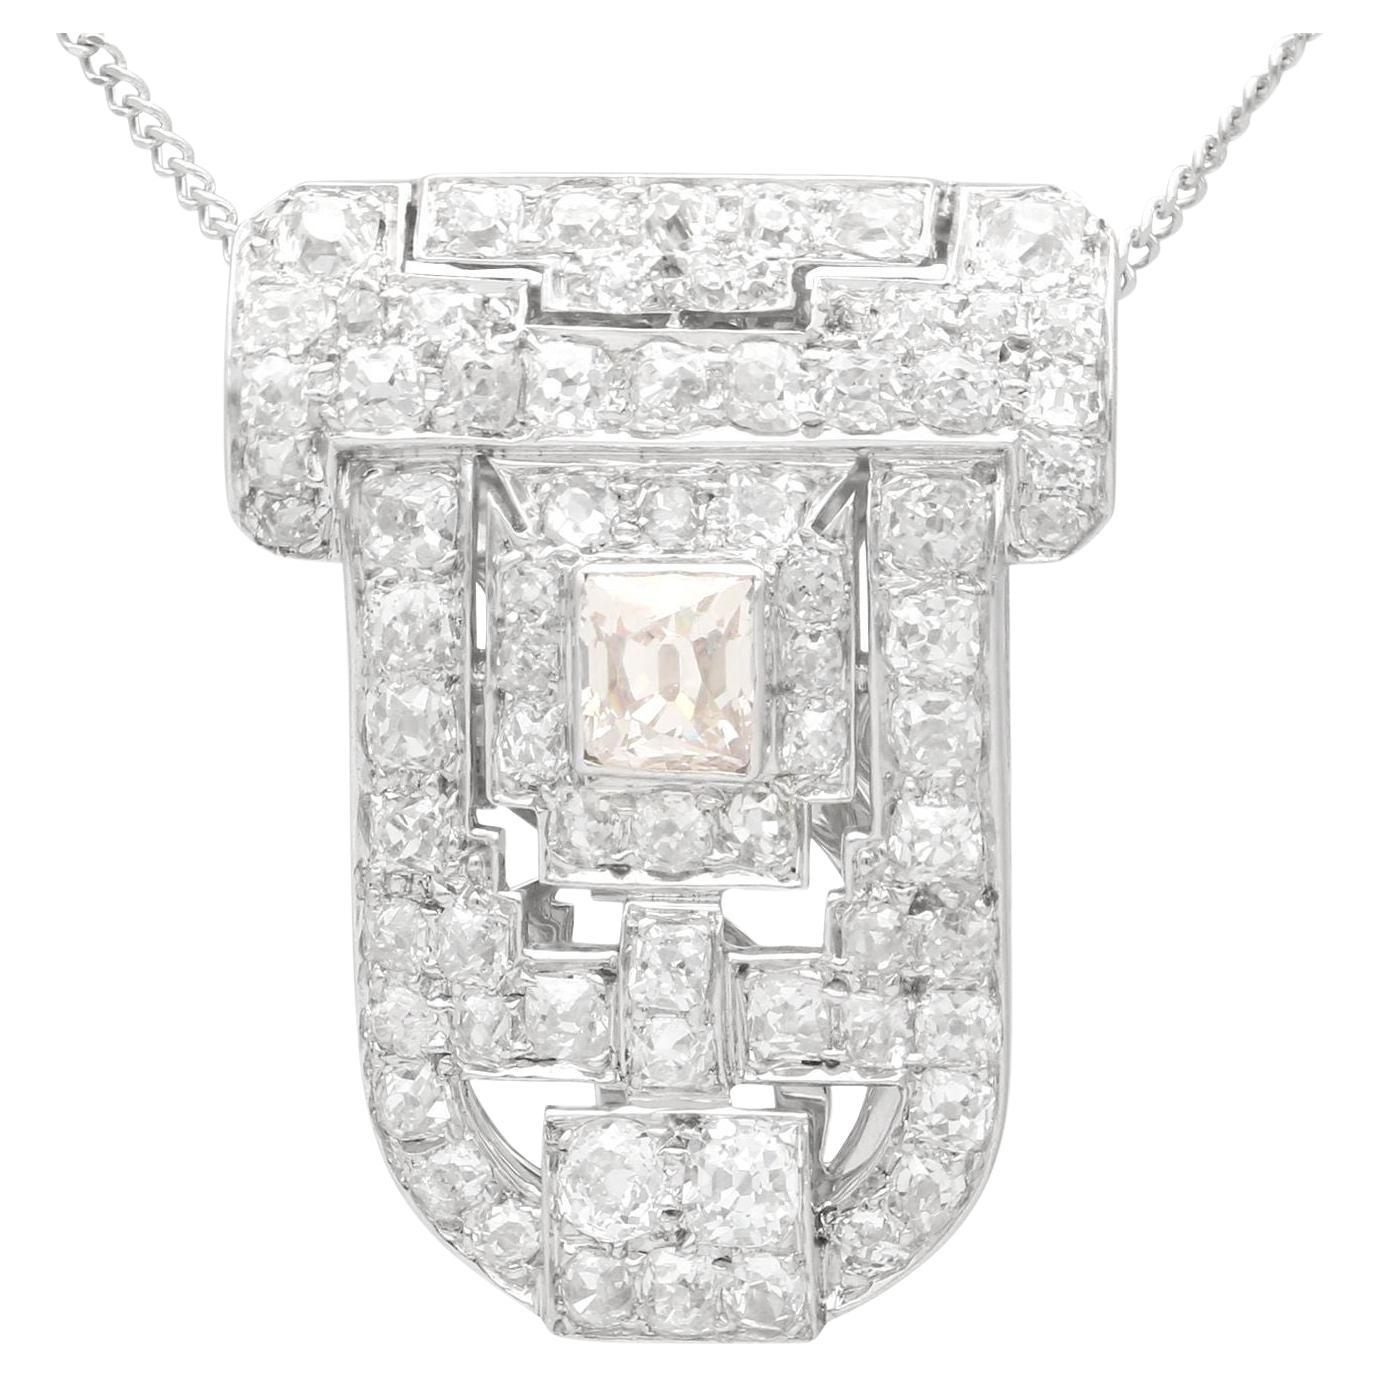 Art Deco 3.87 Carat Diamond and White Gold Clip Brooch / Pendant For Sale